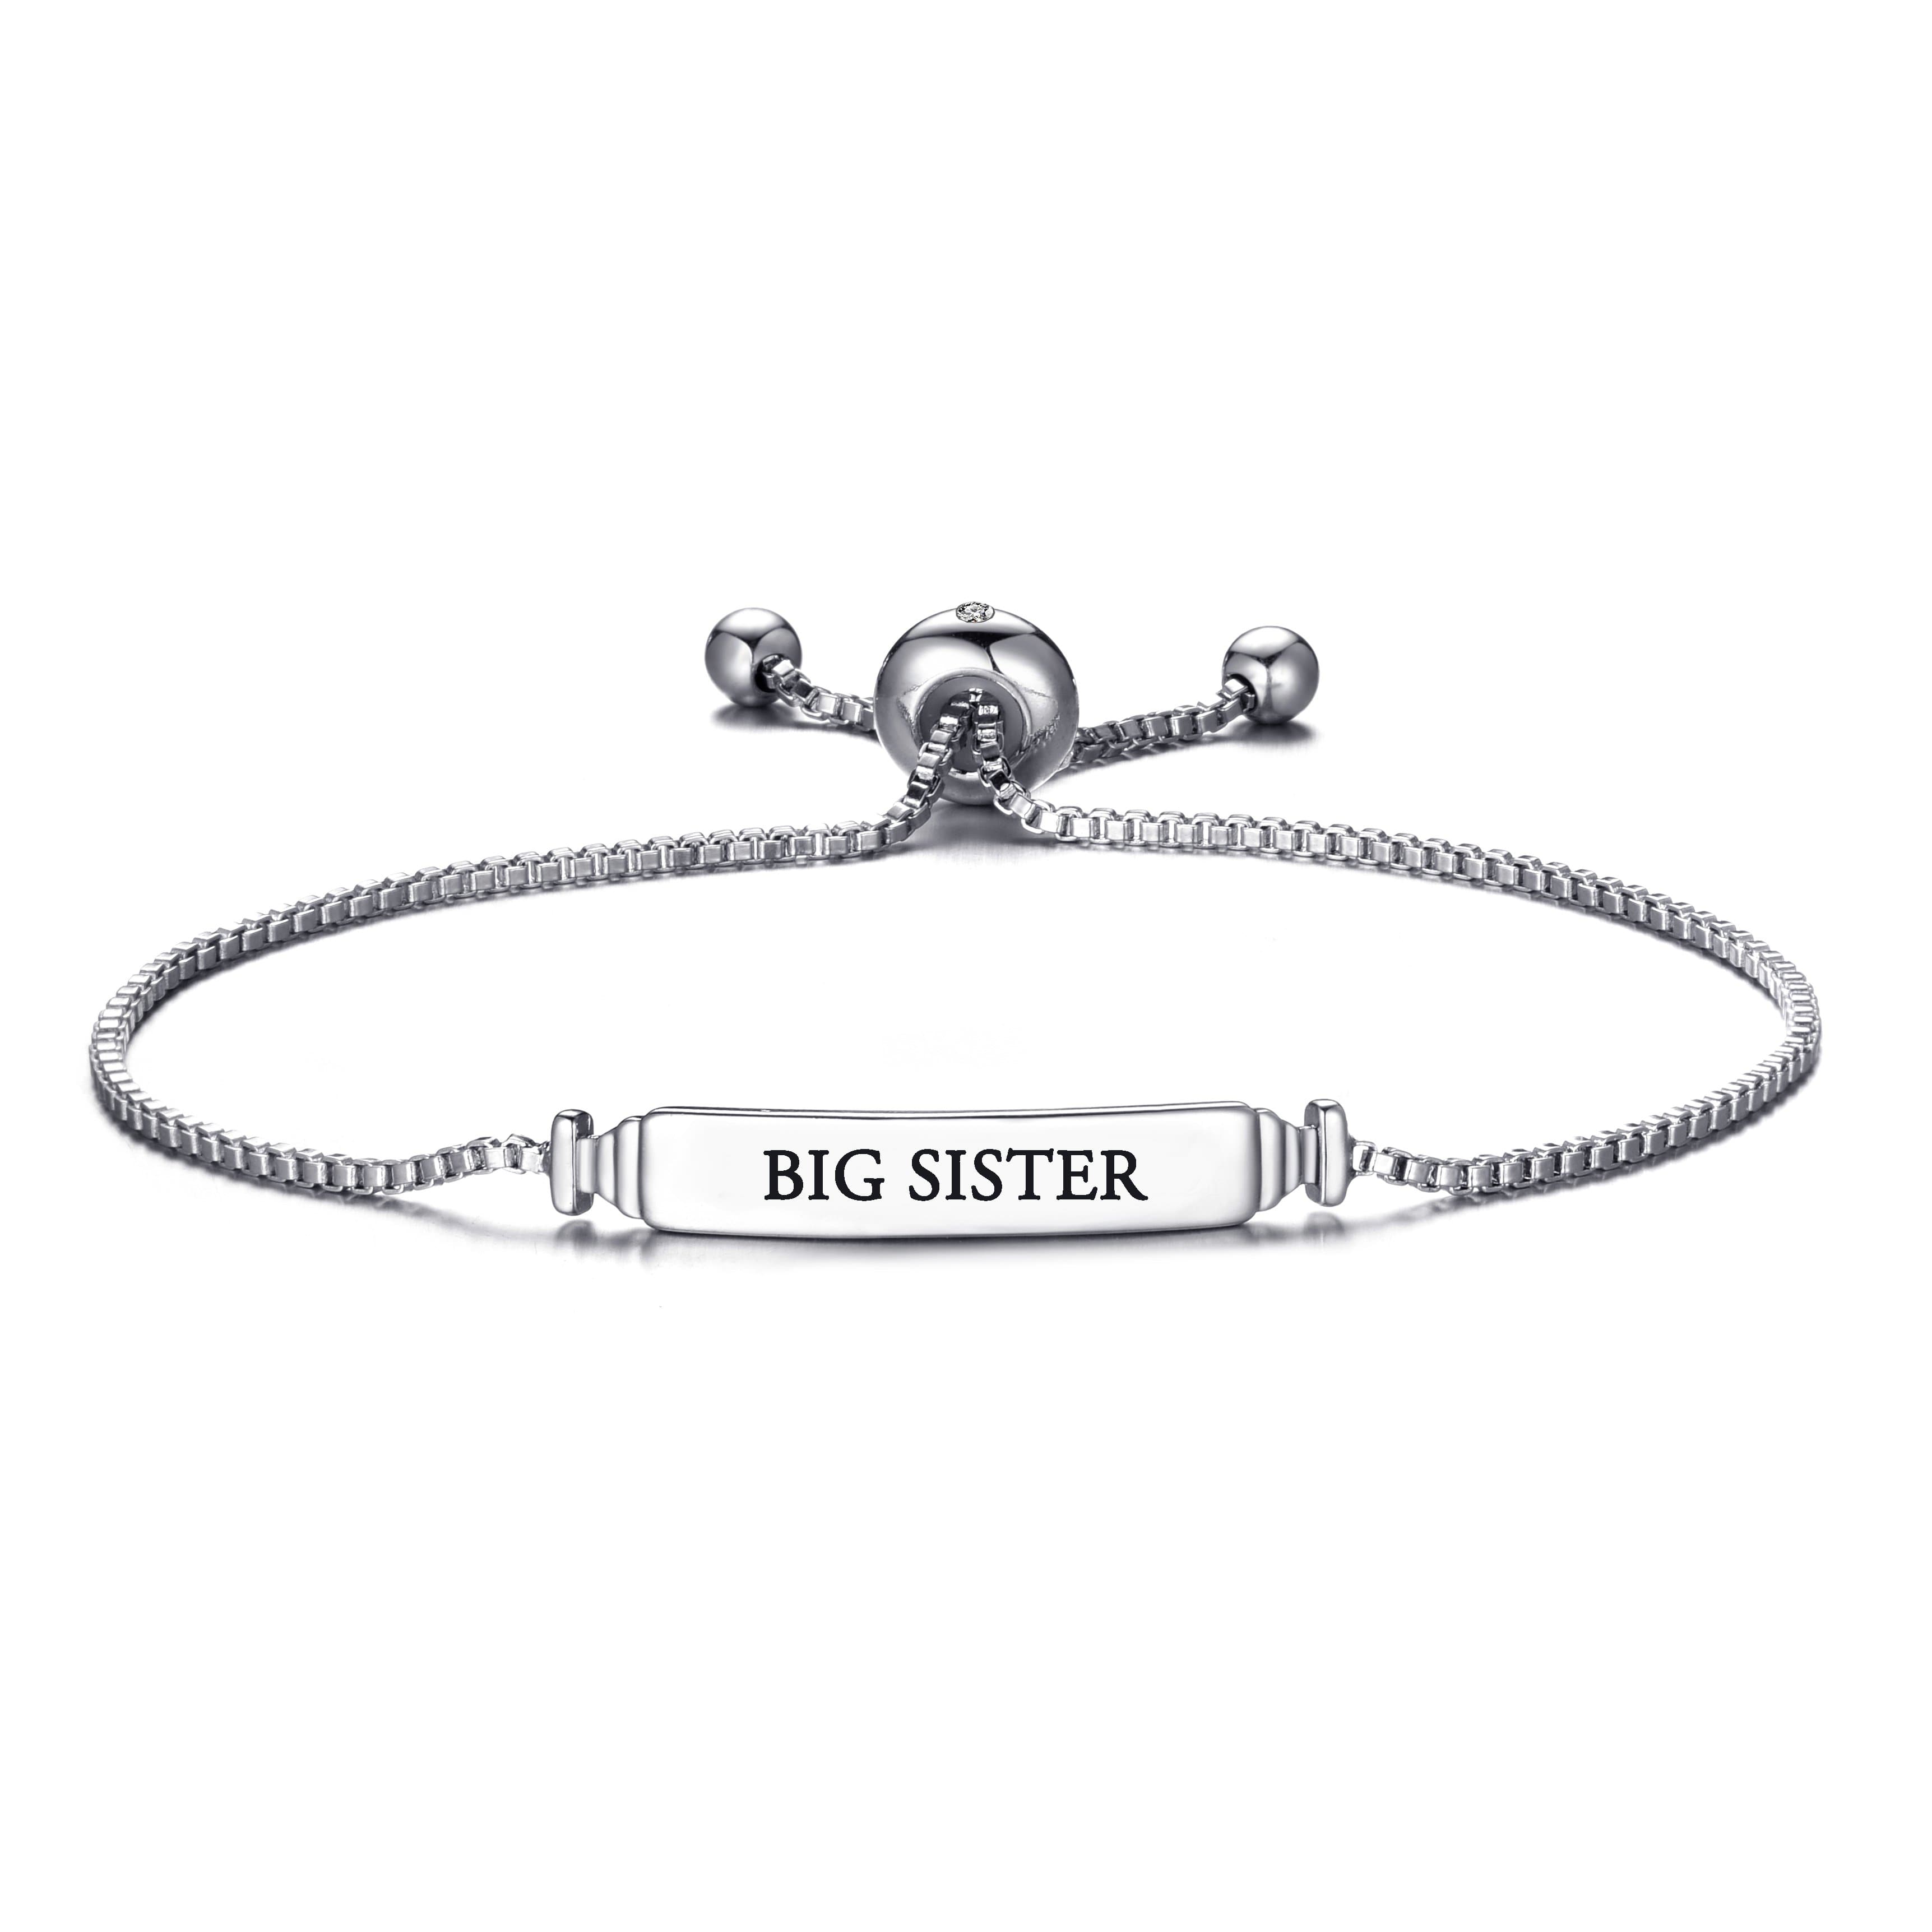 Big Sister ID Friendship Bracelet Created with Zircondia® Crystals by Philip Jones Jewellery